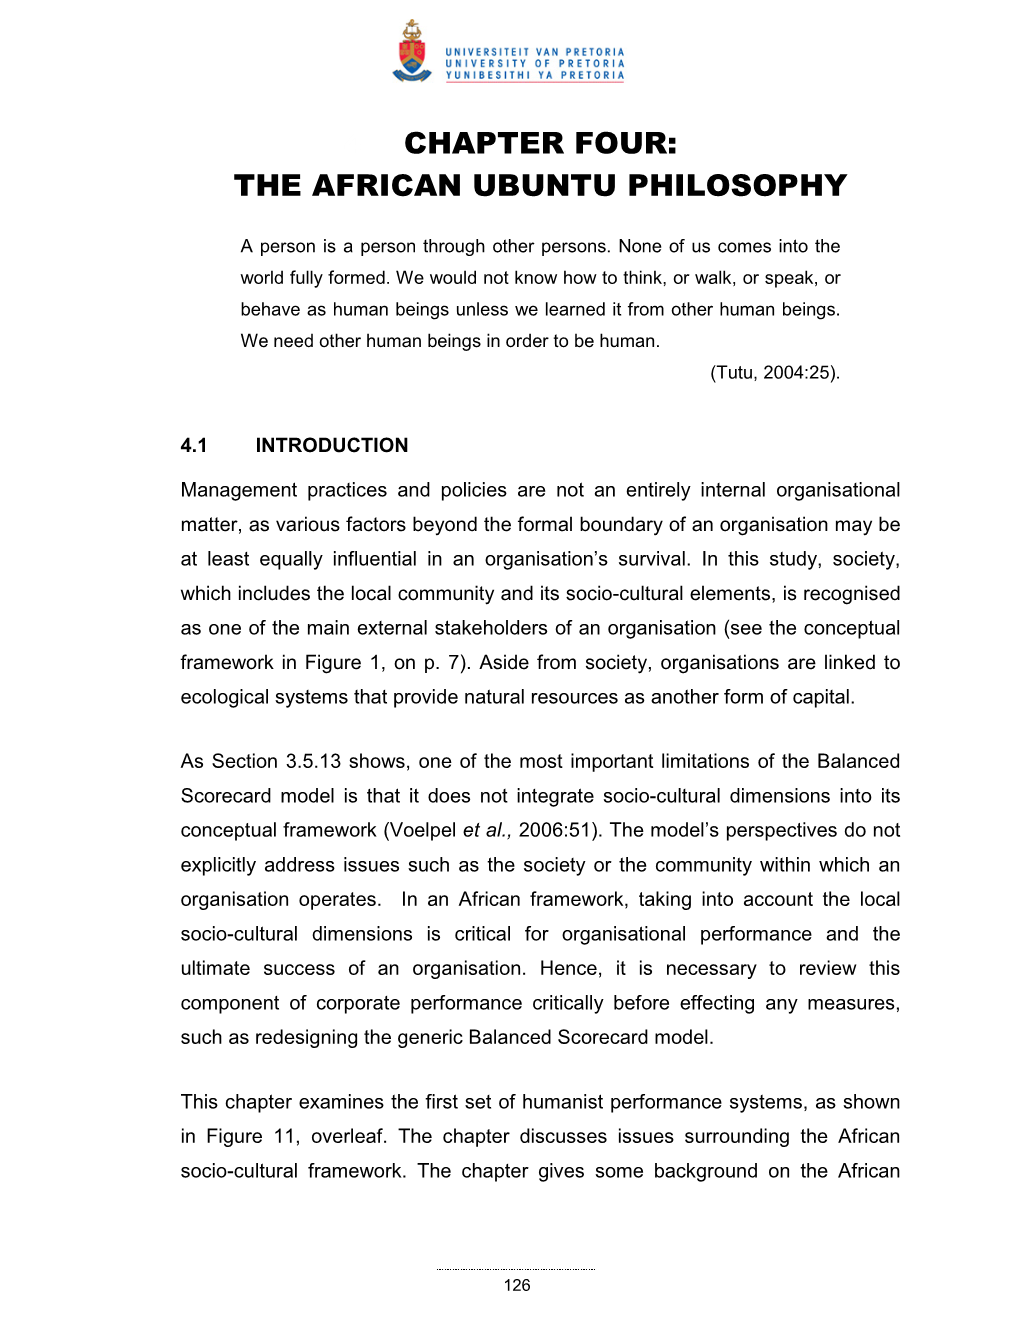 essay on ubuntu african philosophy